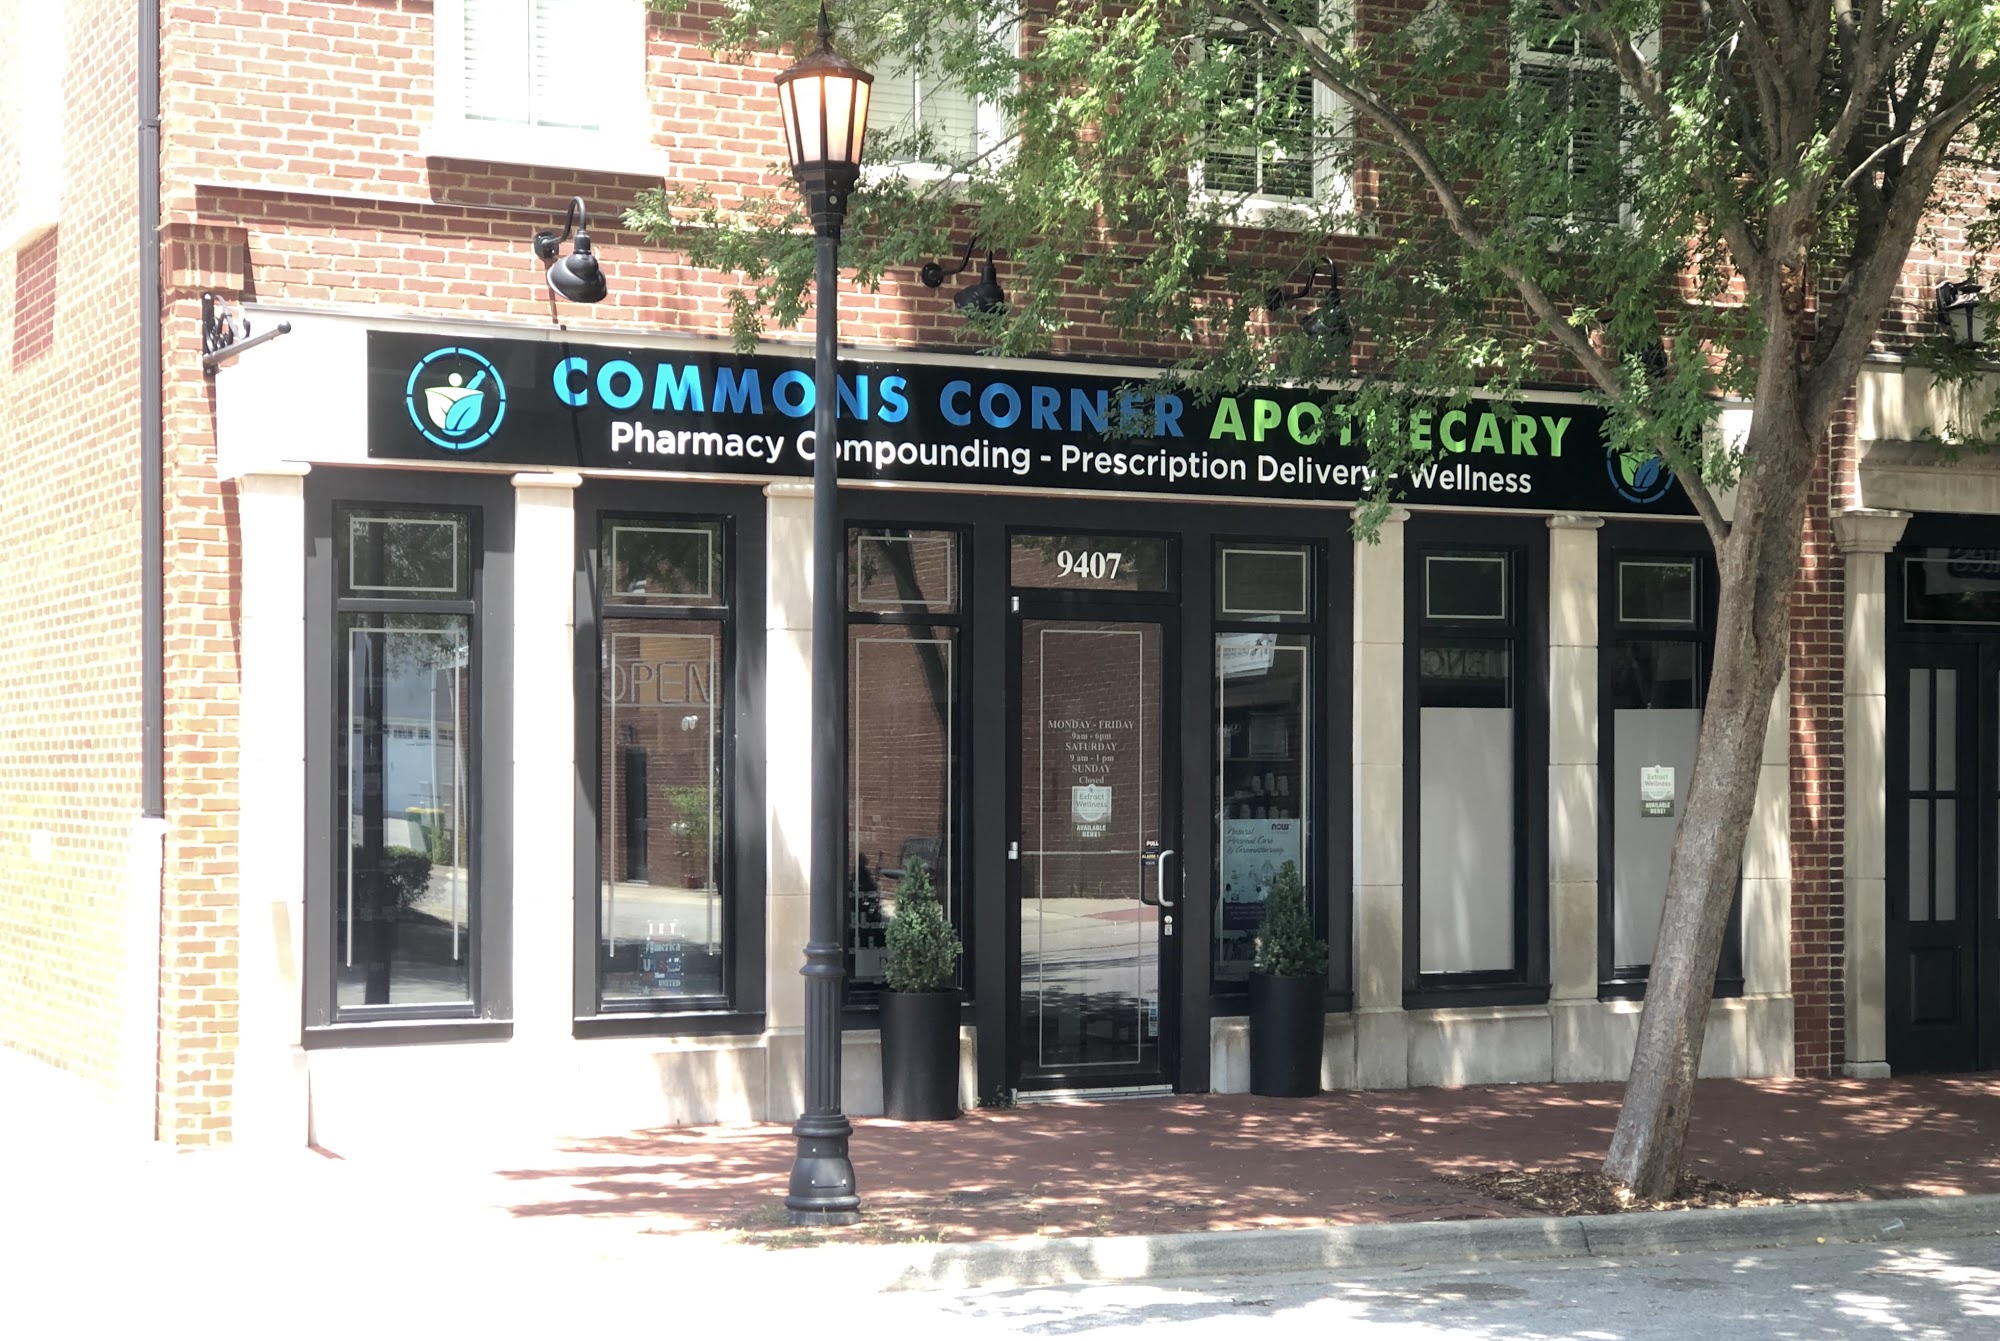 Commons Corner Apothecary